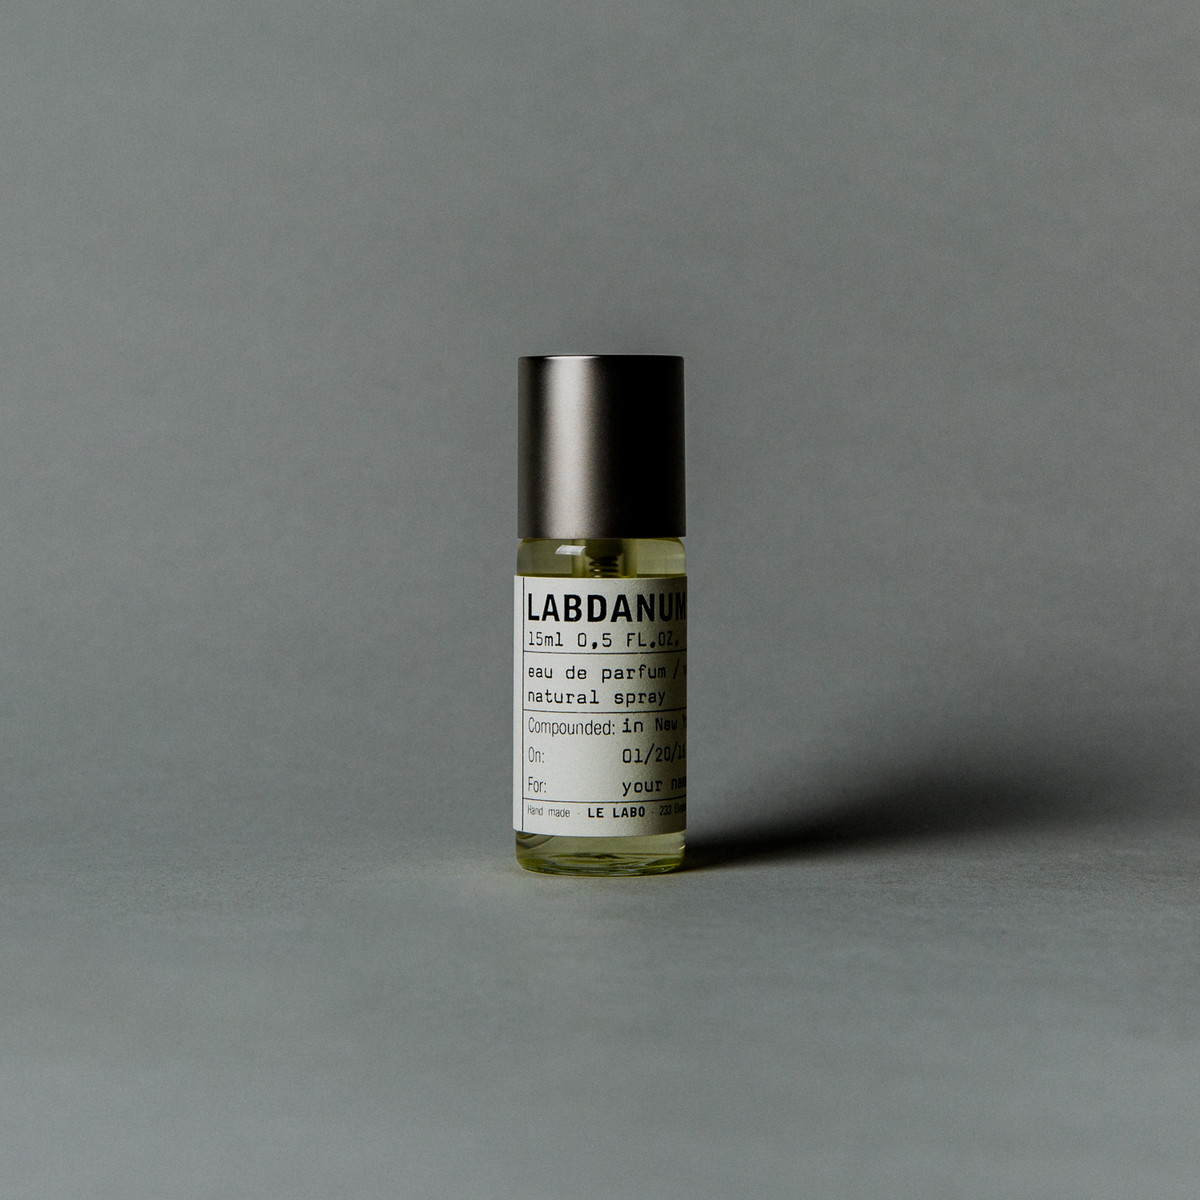 LABDANUM 18 | Le Labo Fragrances